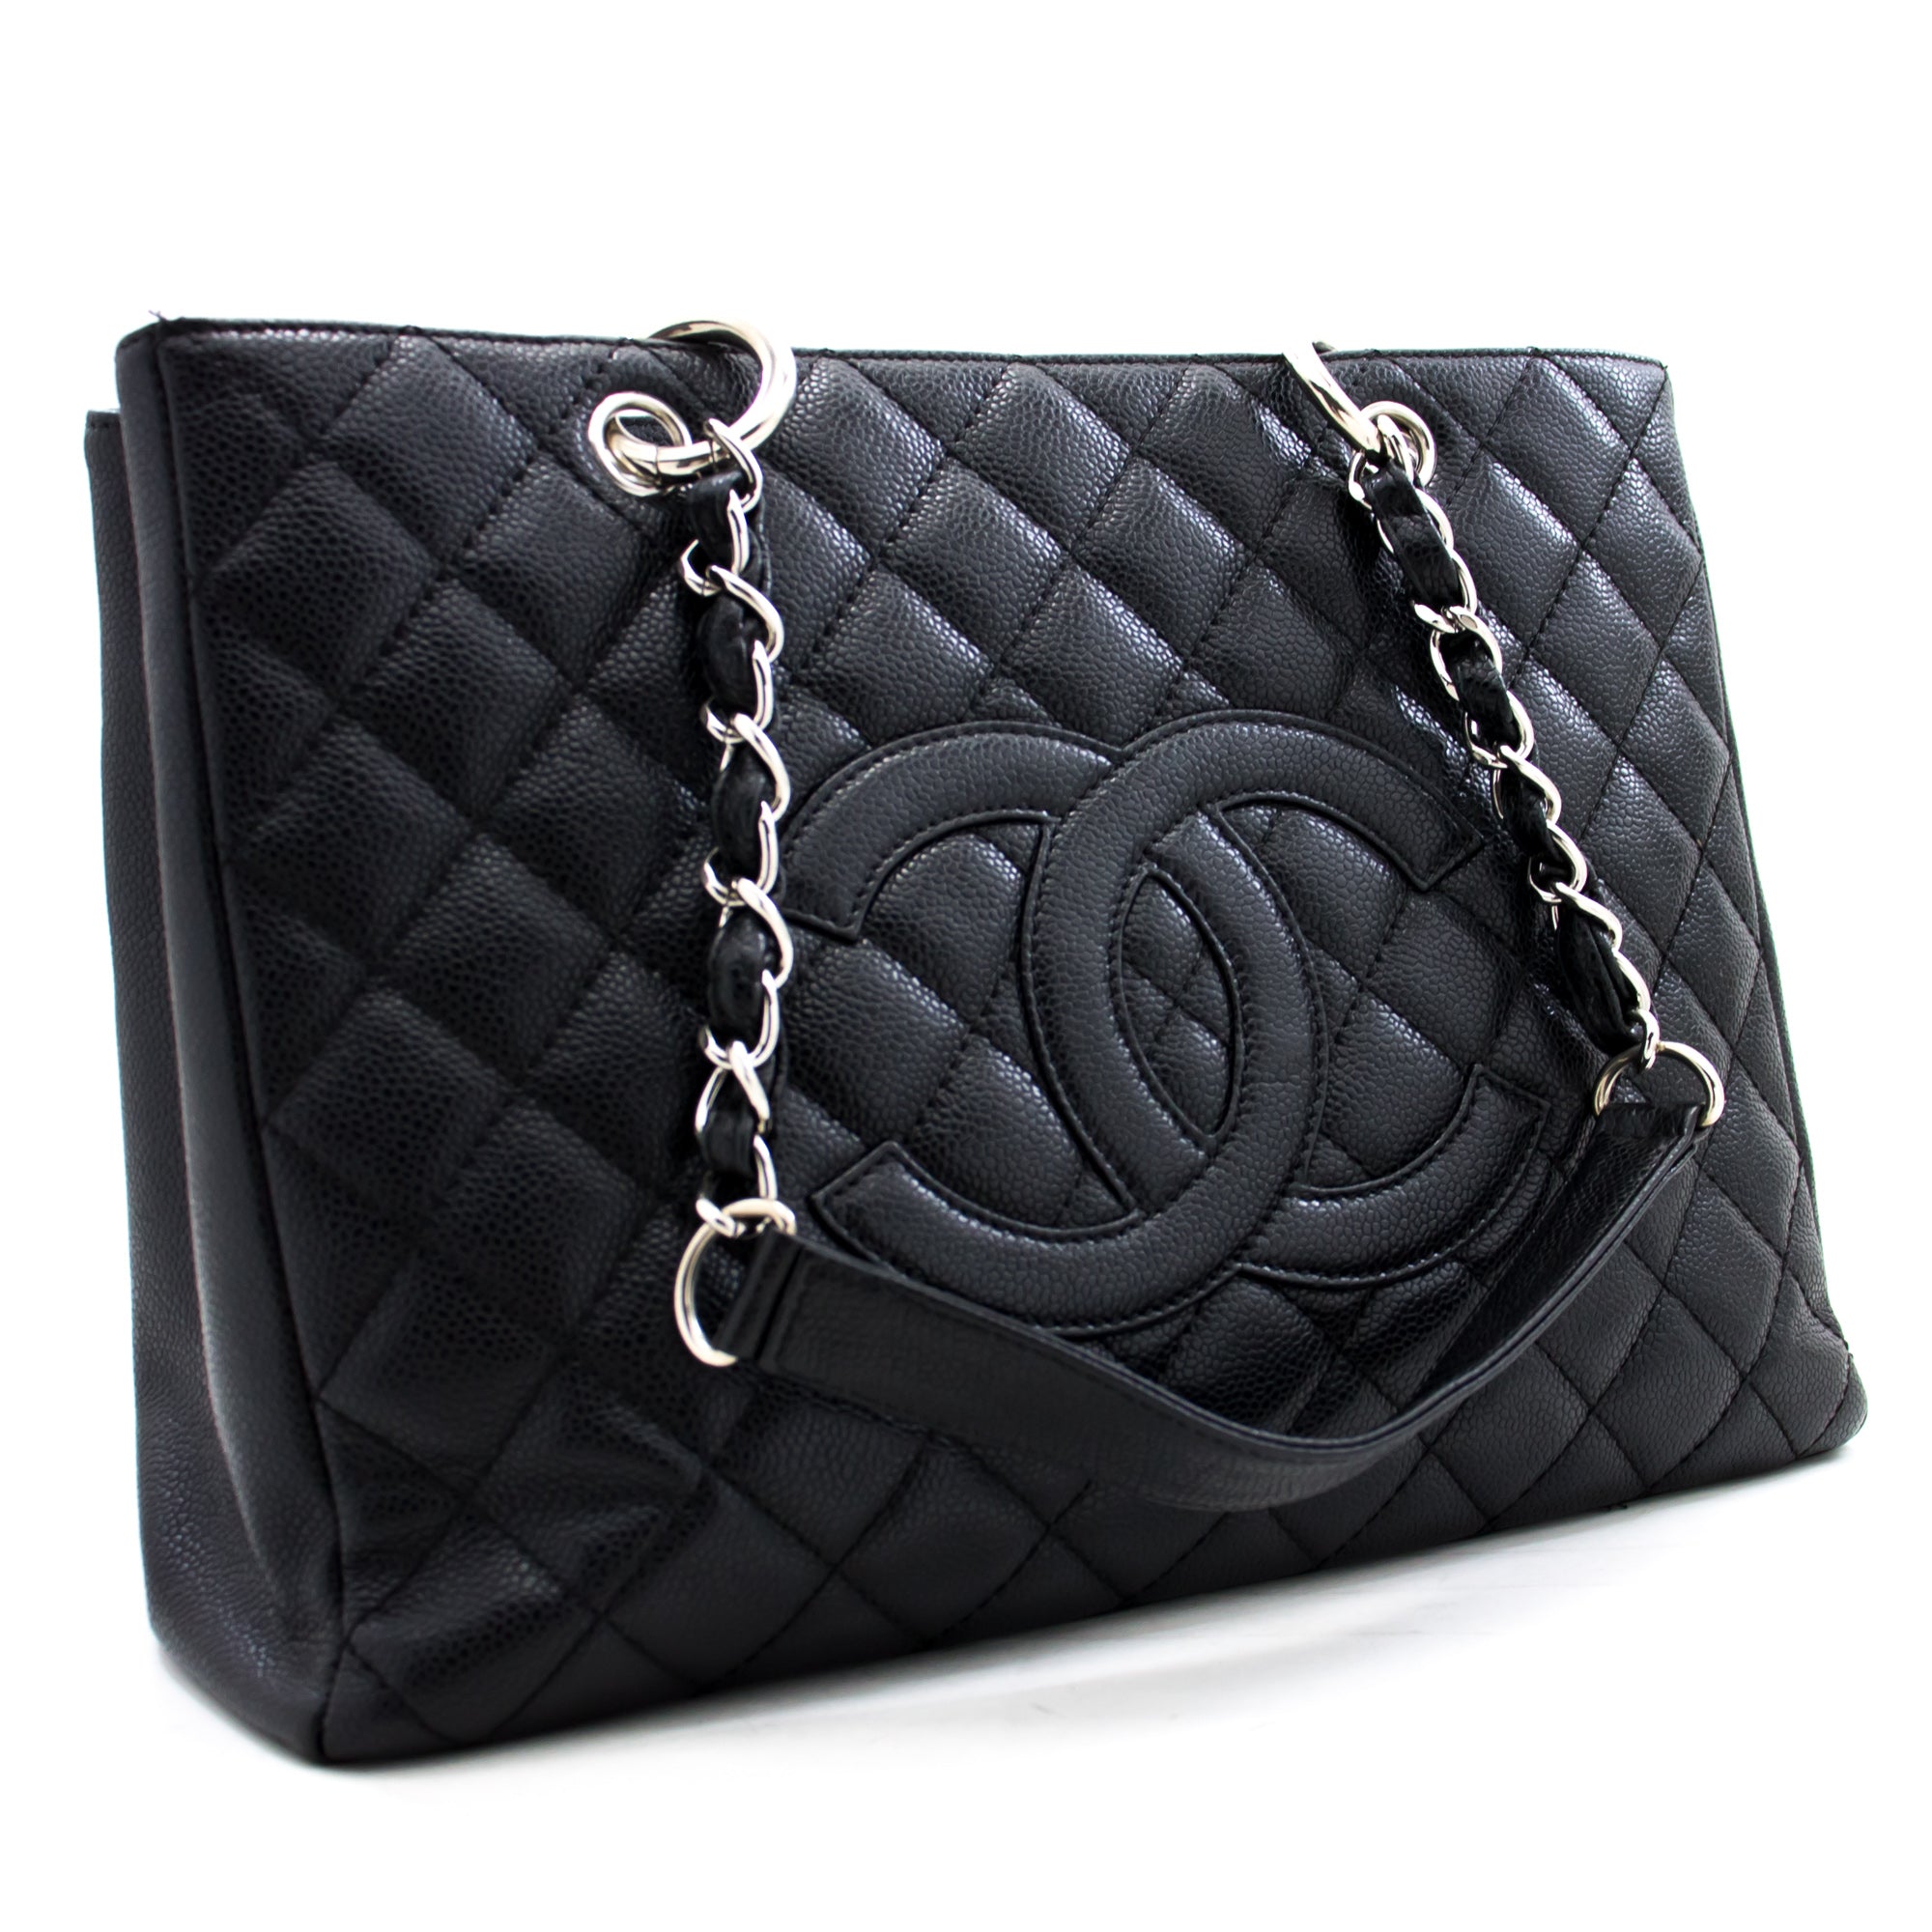 The Many Bags of Sofia Vergara - PurseBlog  Chanel handbags, Chanel gst,  Chanel shopper